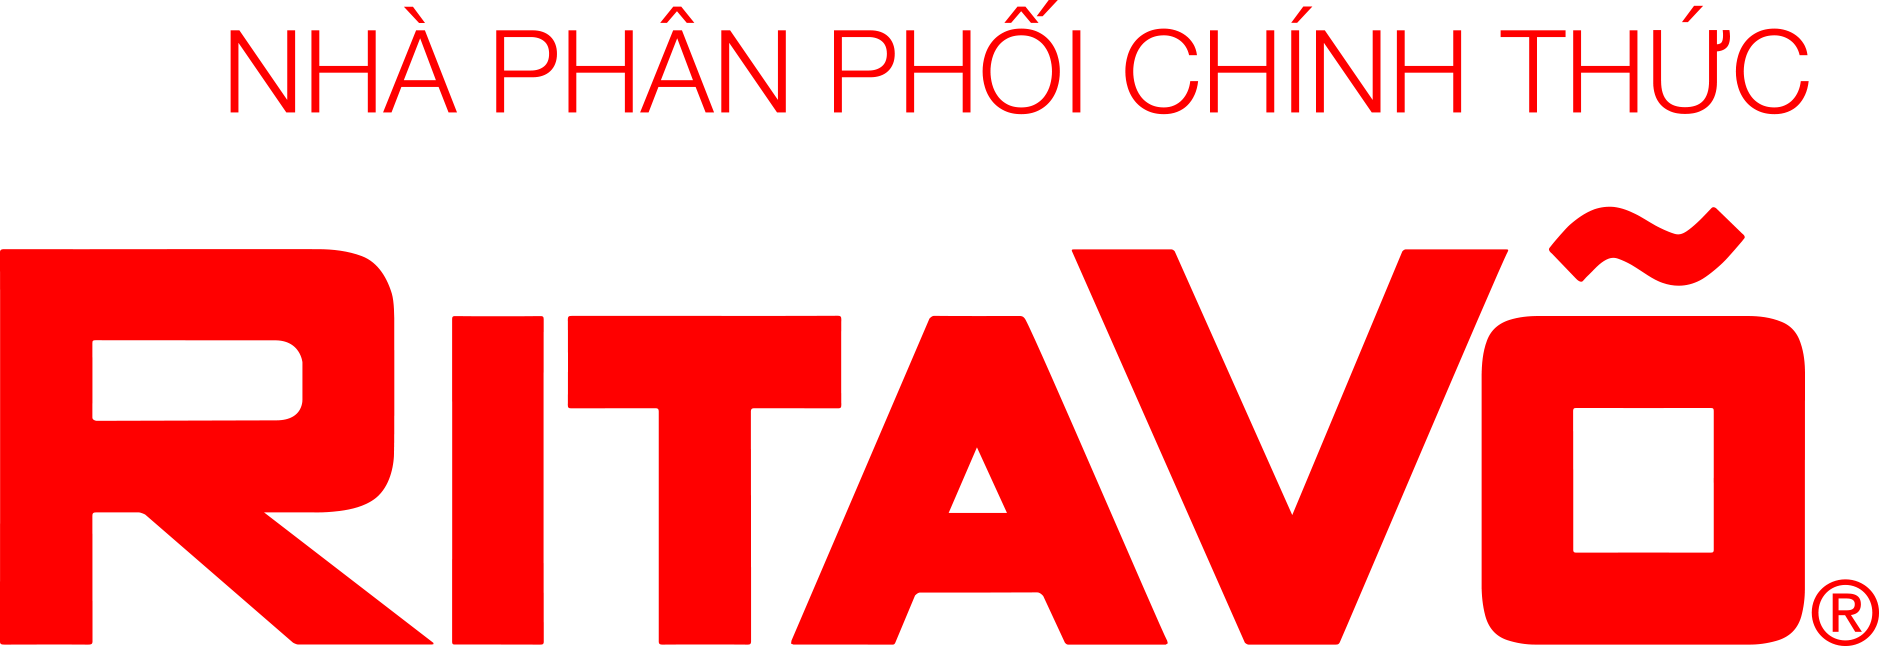 Ritavo-logo